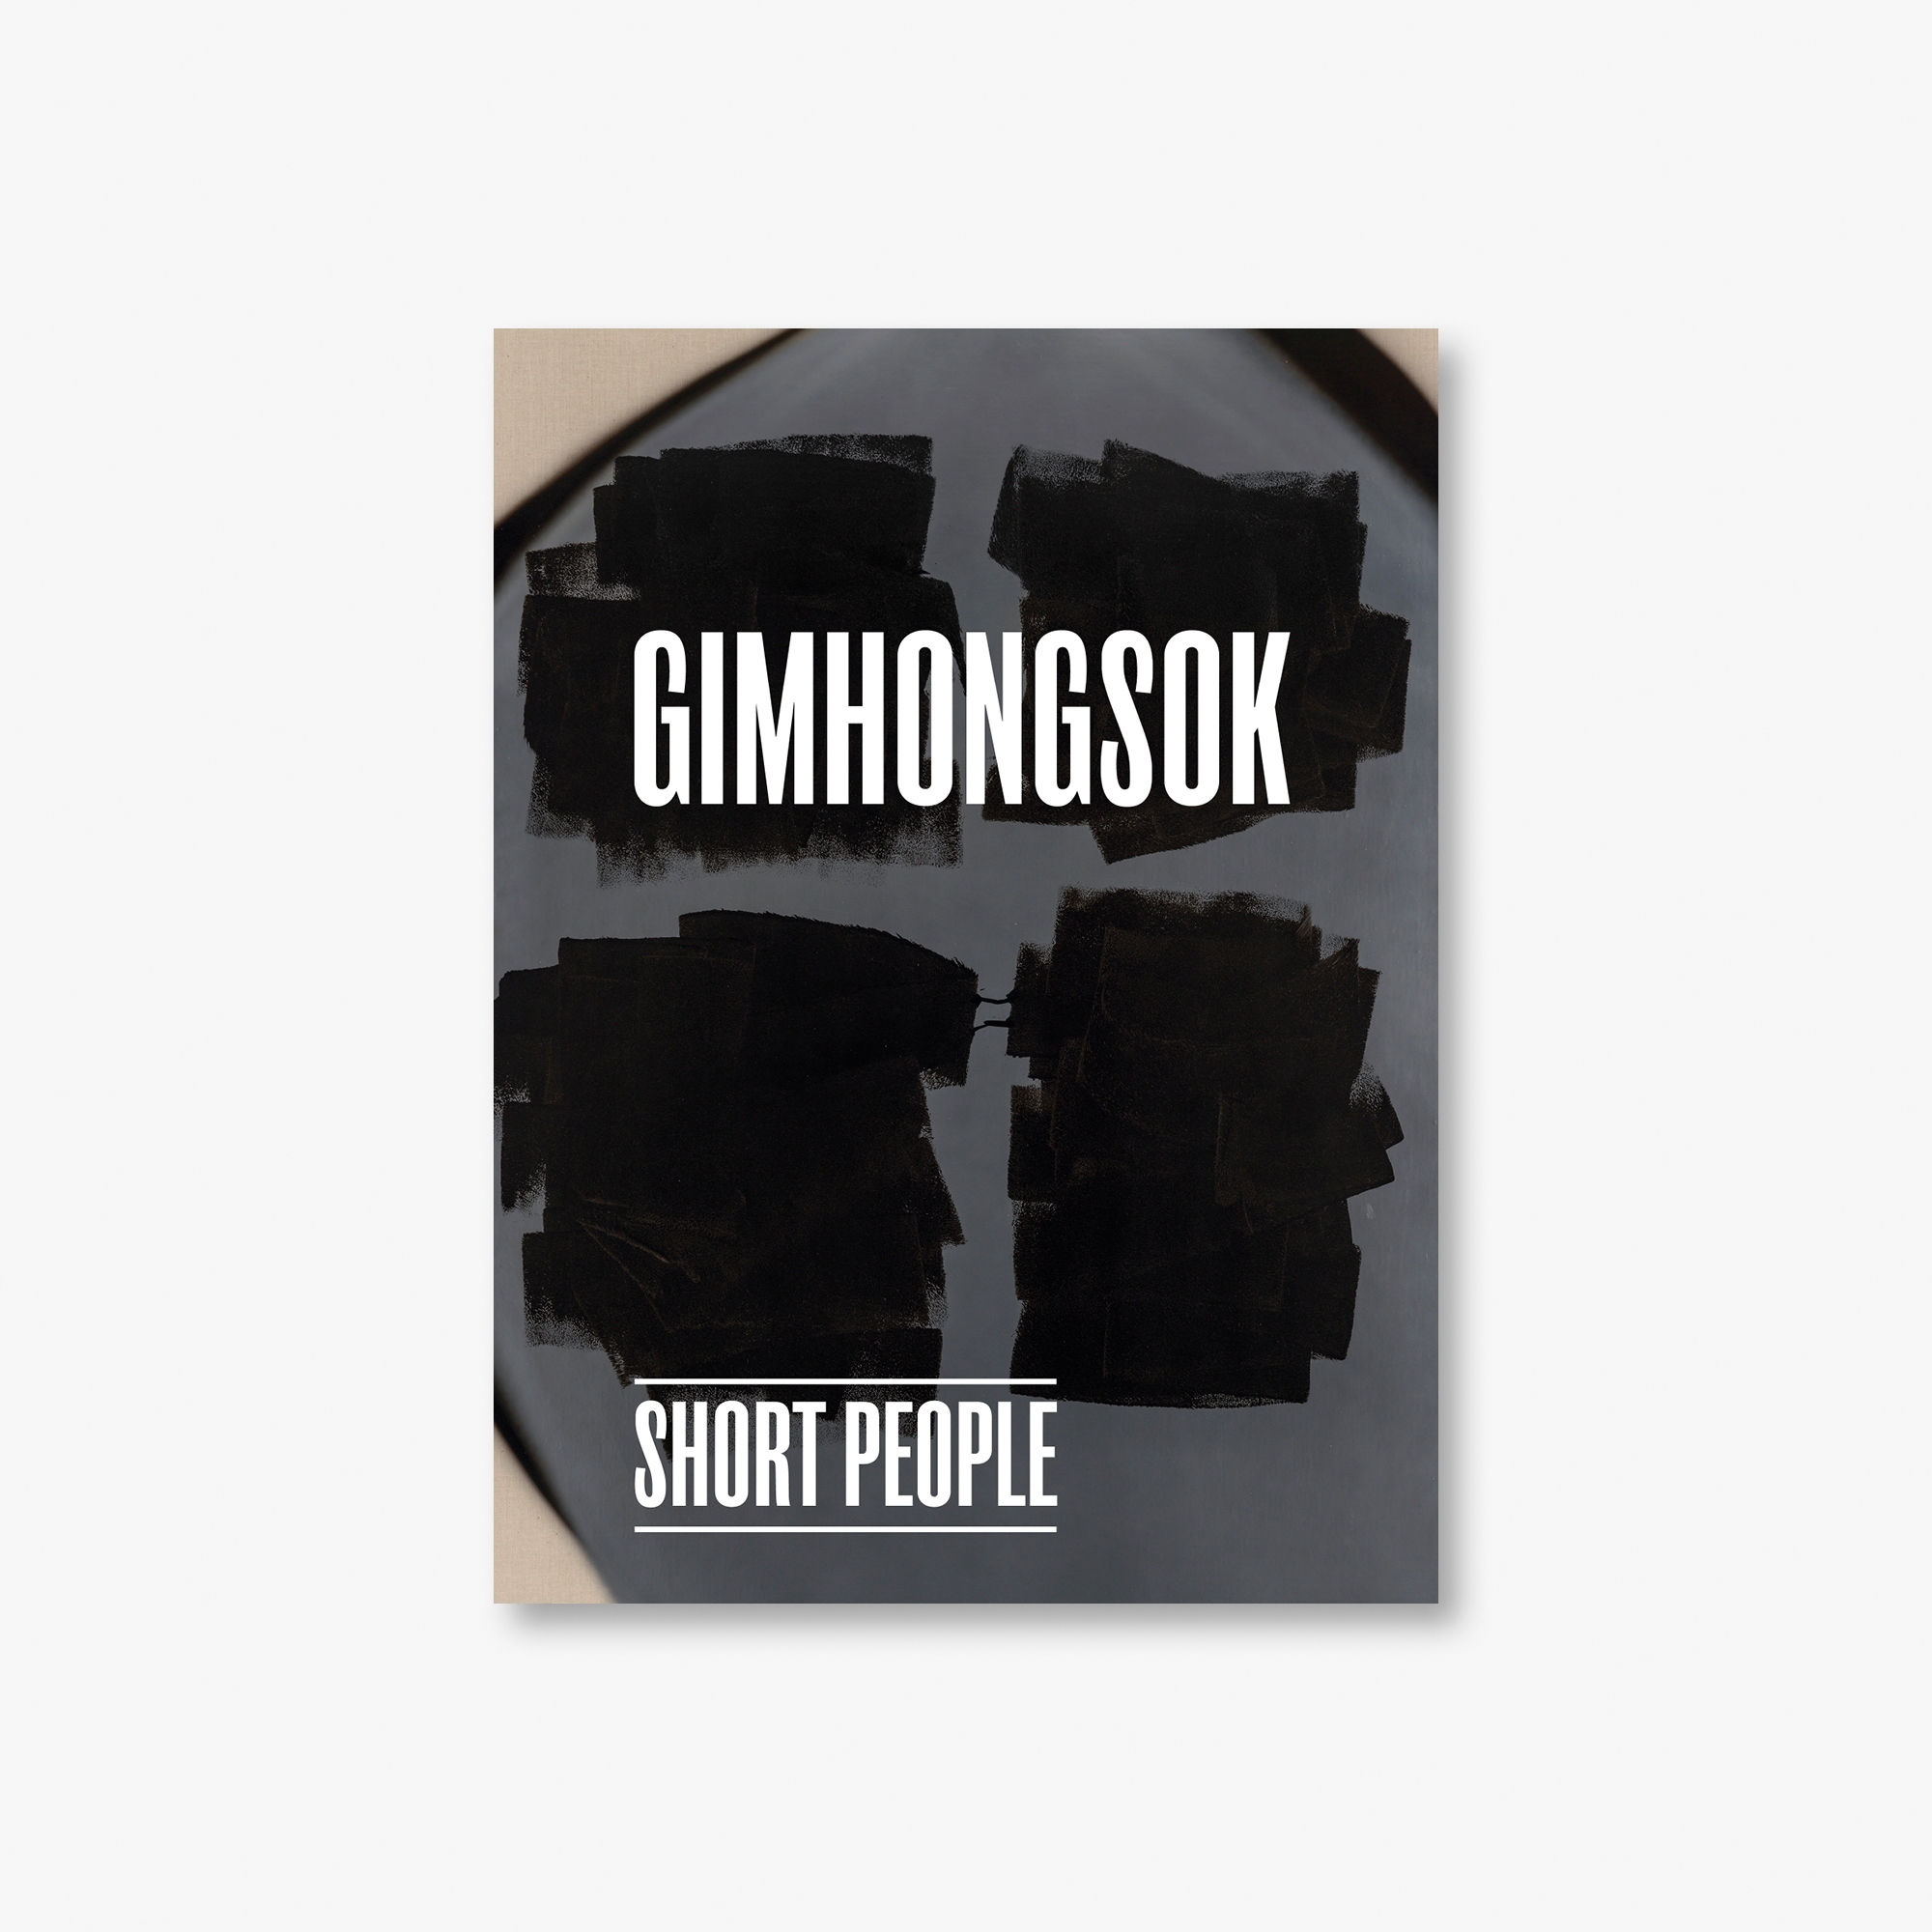 Gimhongsok: Short People